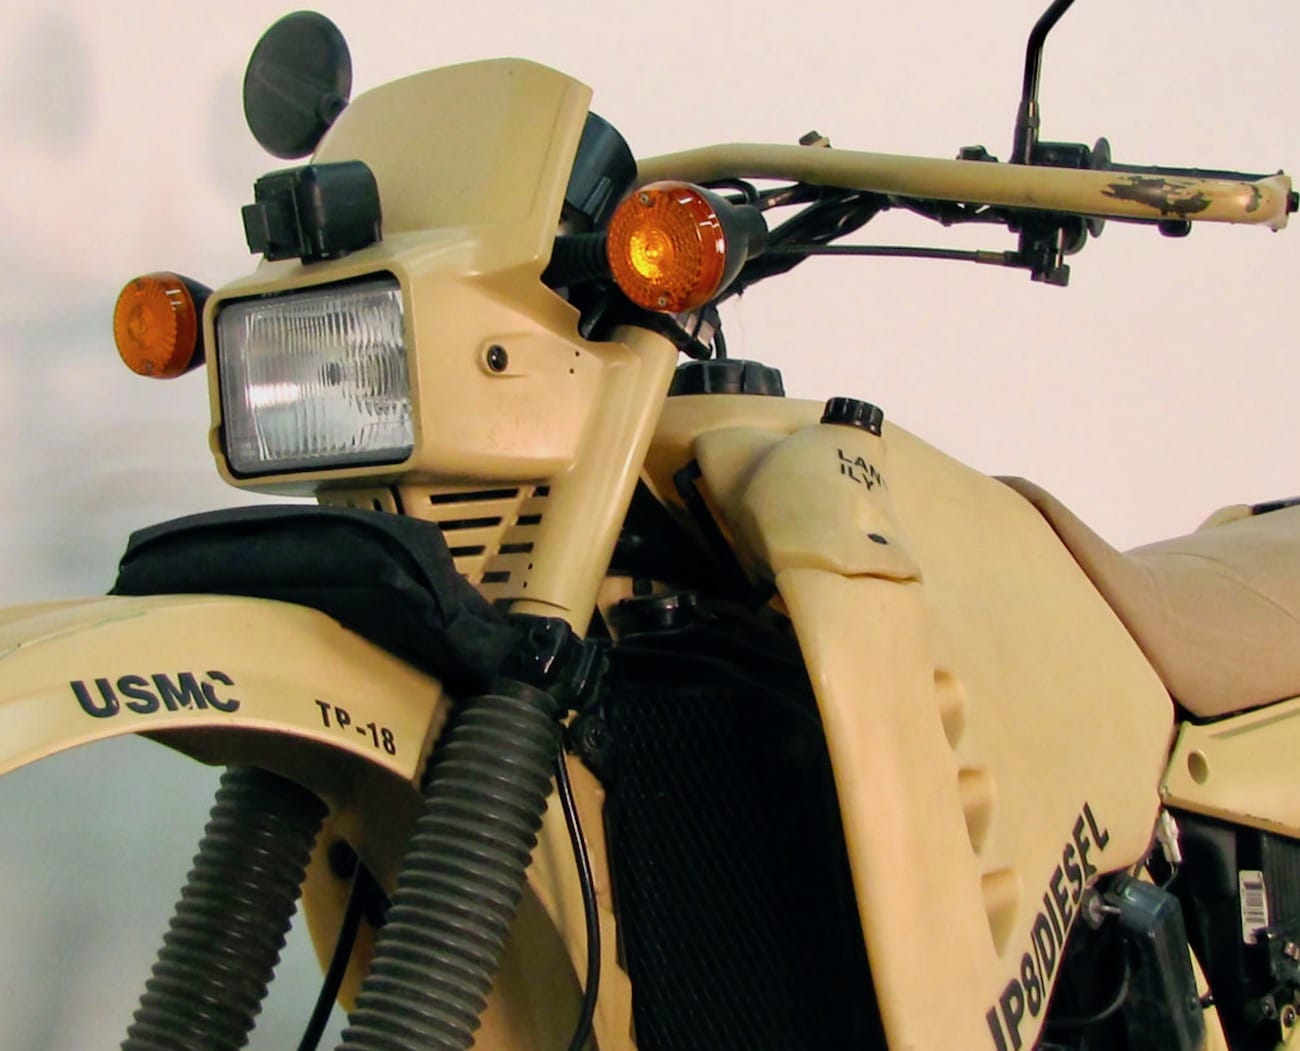 Military Kawasaki KLR650 Converted to Run on Diesel Fuel | DriveMag Riders